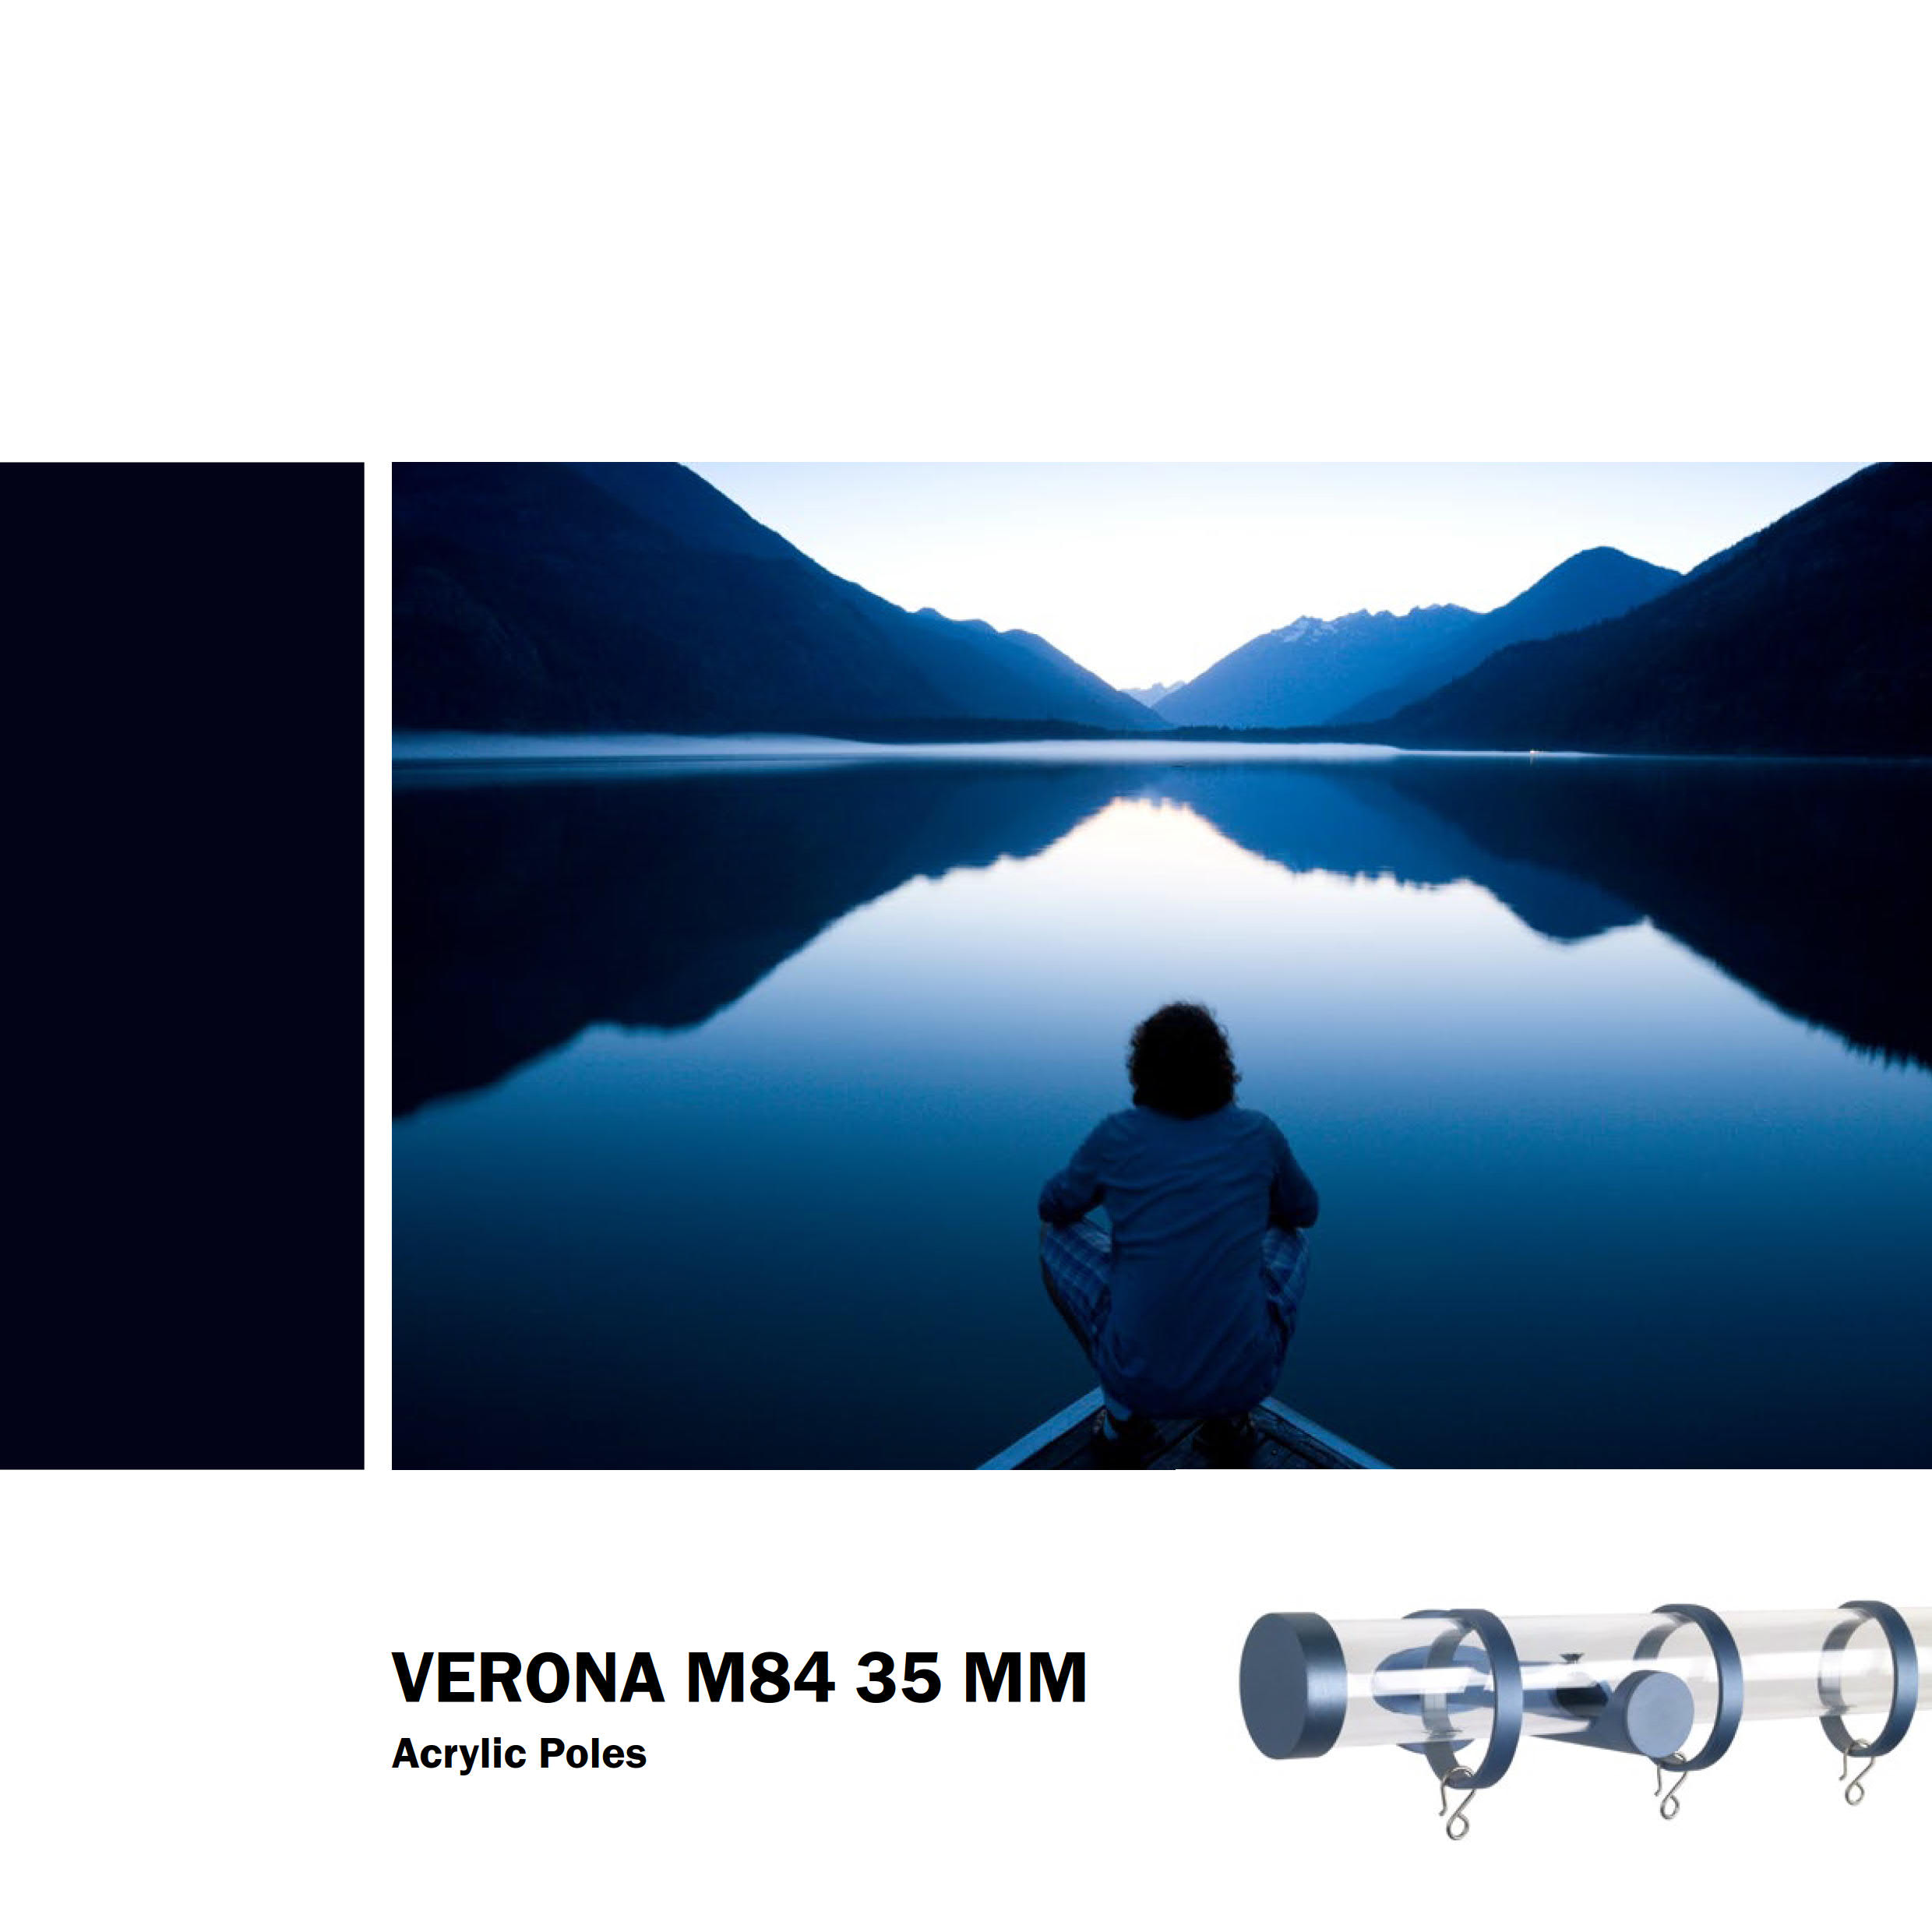 Verona m84 35 mm